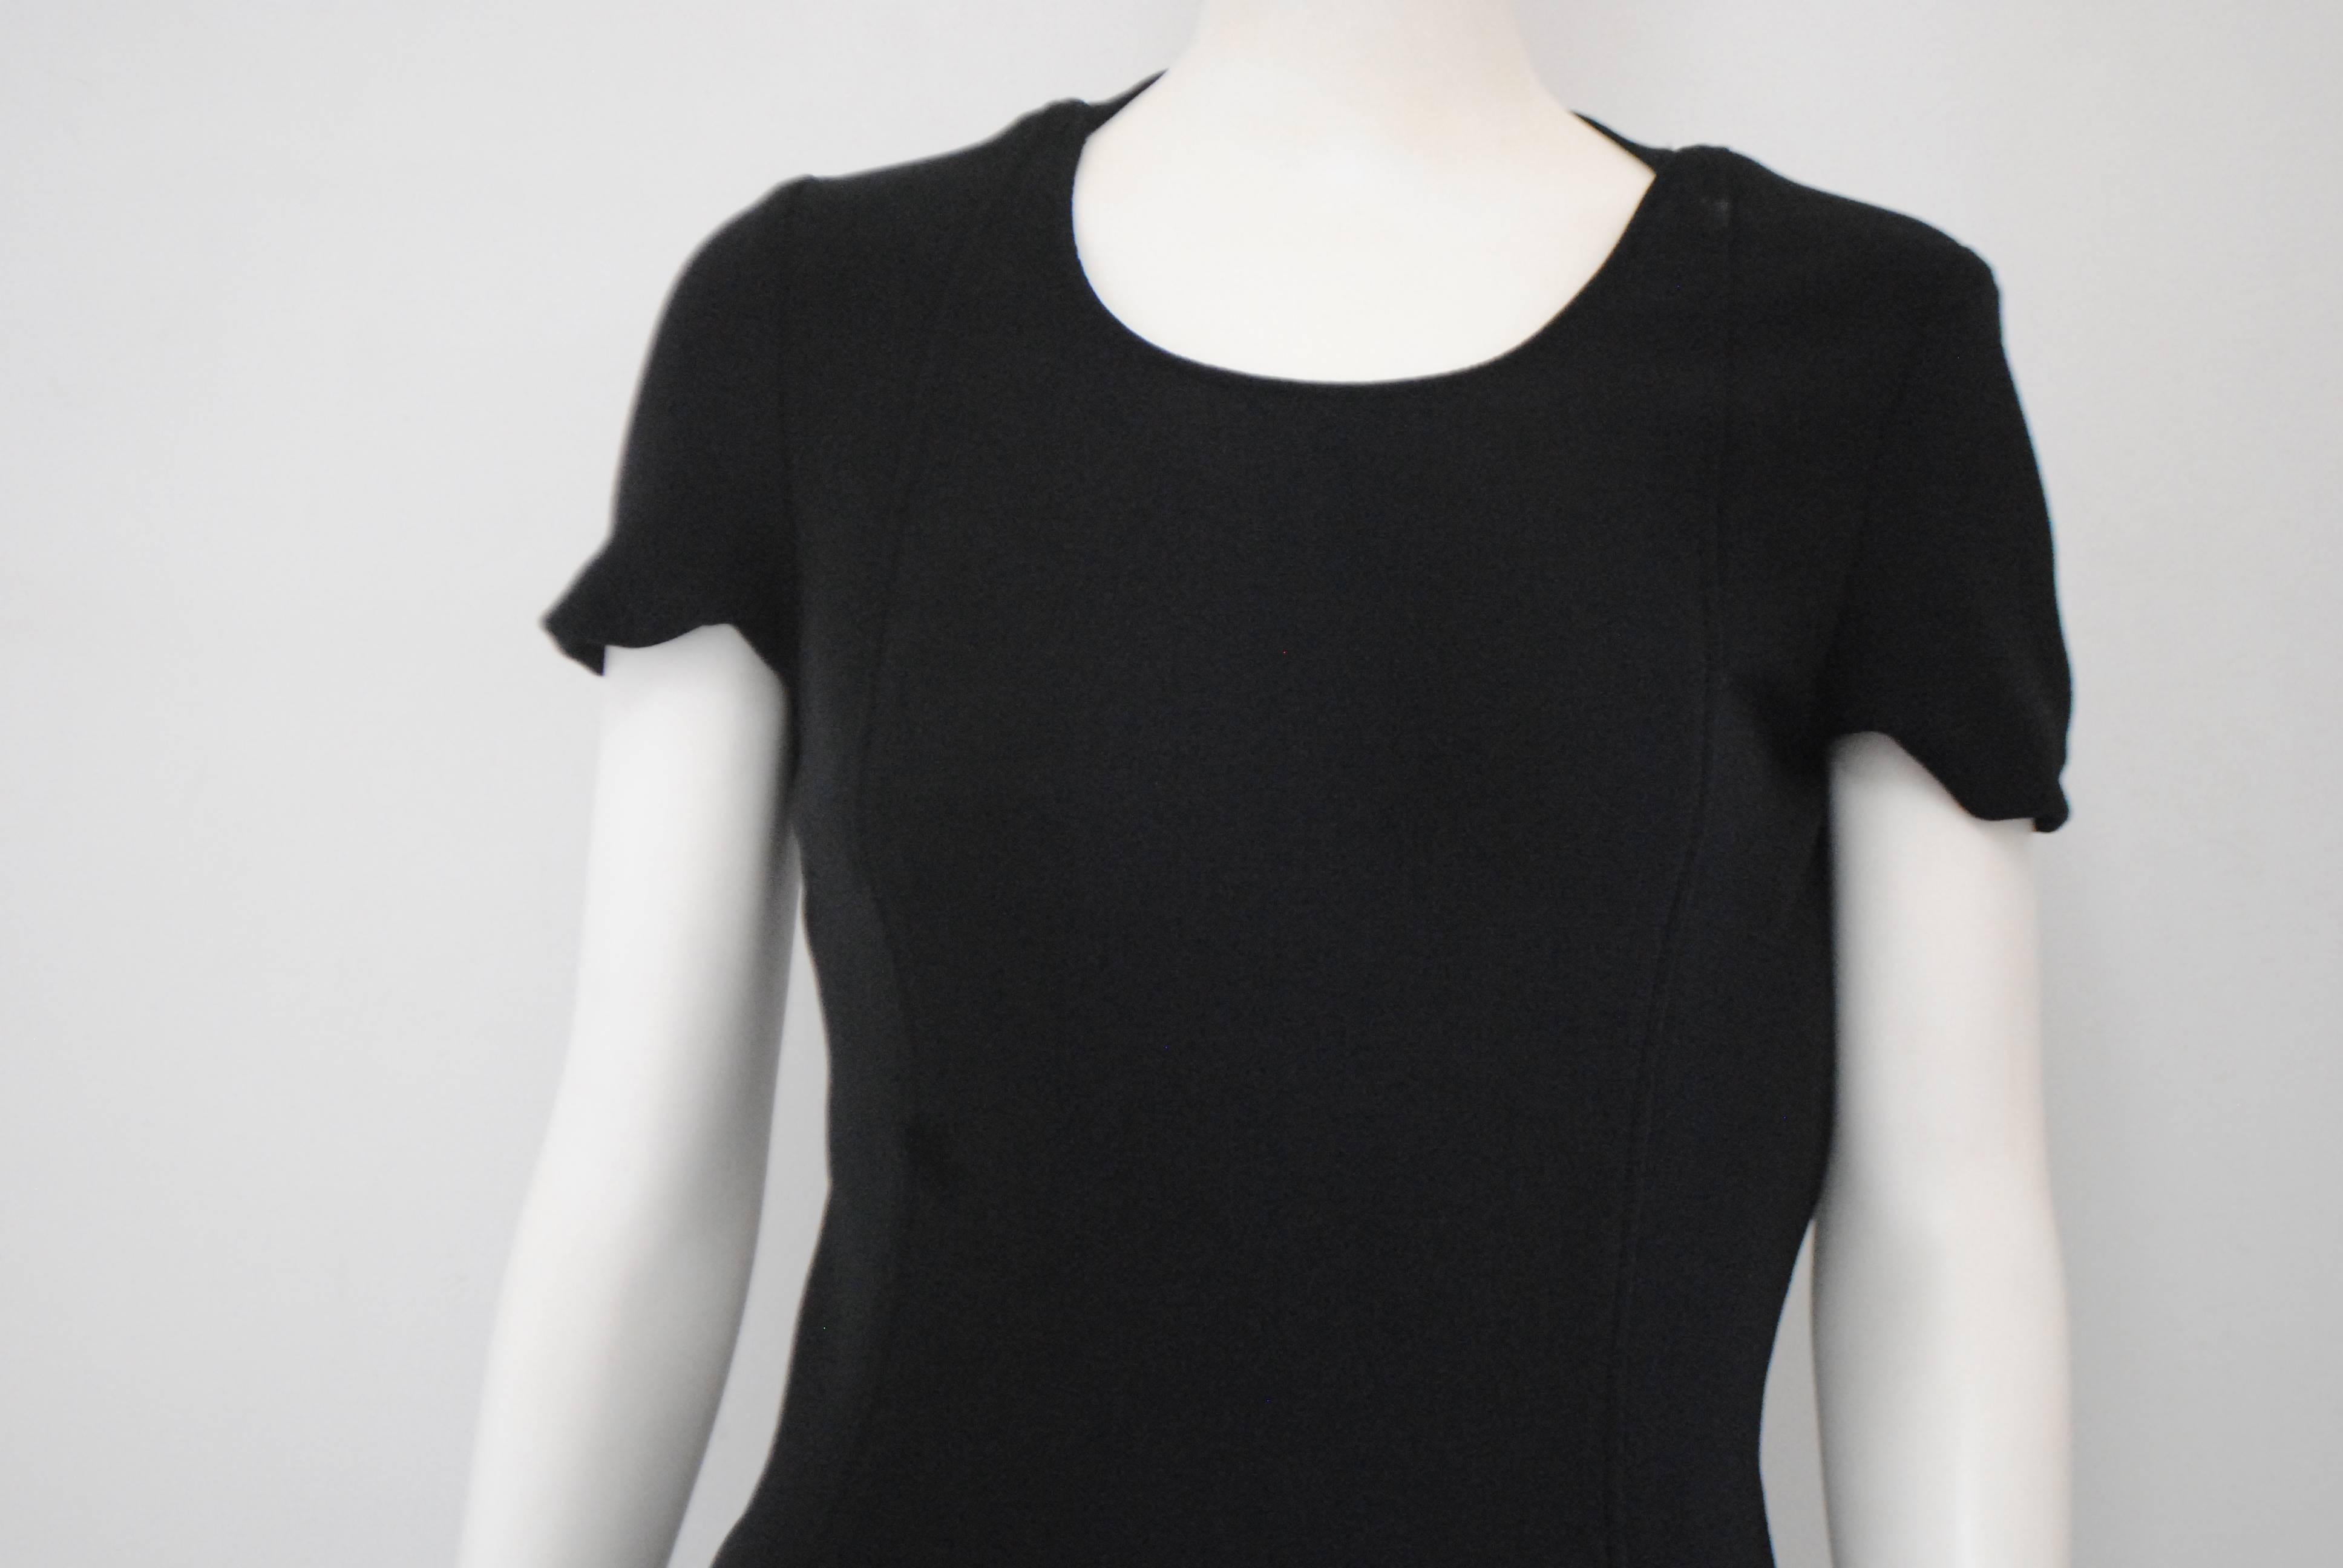 Gianfranco Ferré Black Dress For Sale 2